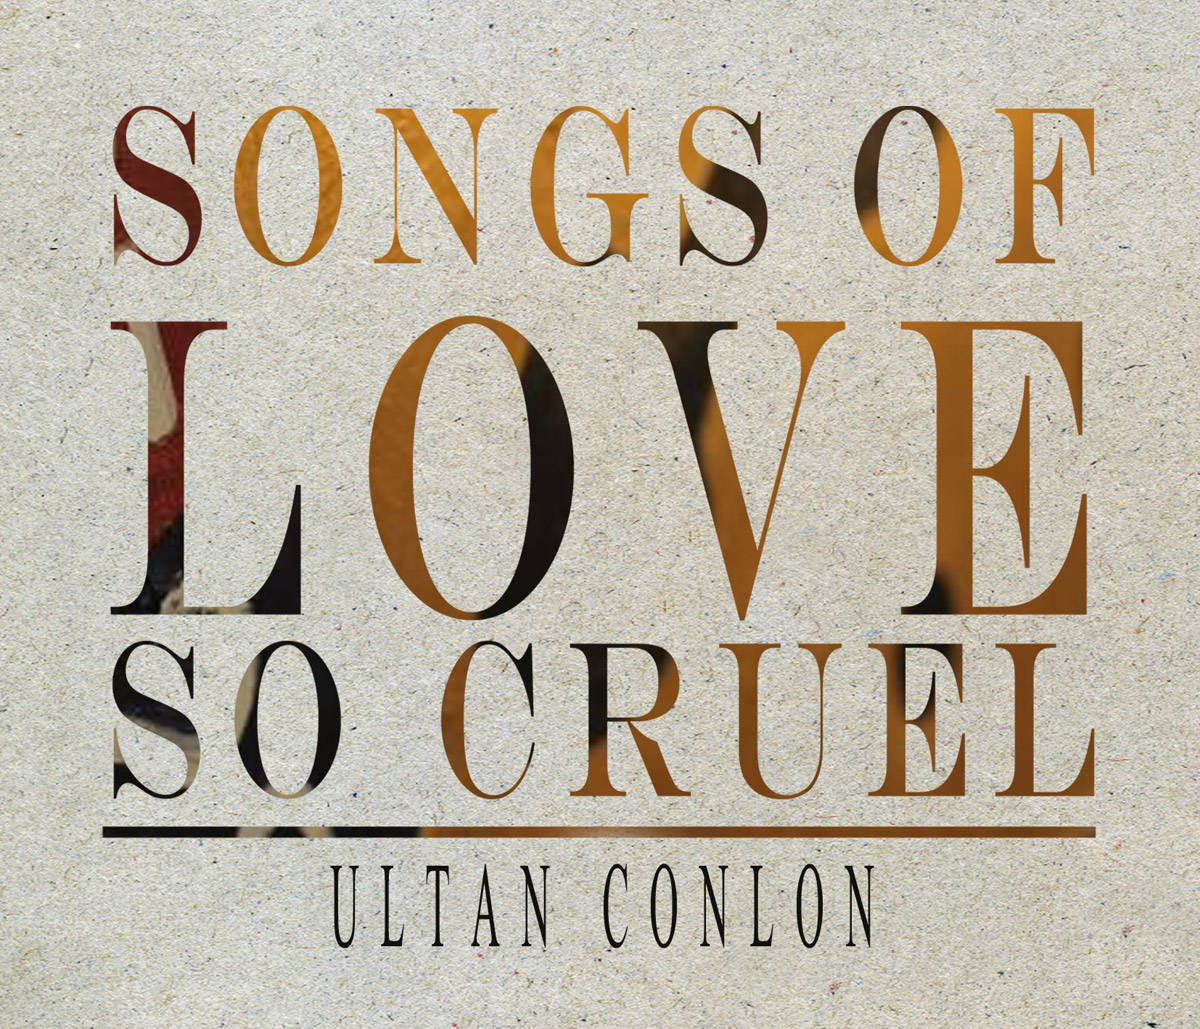 The new album from Irish musician Ultan Conlon